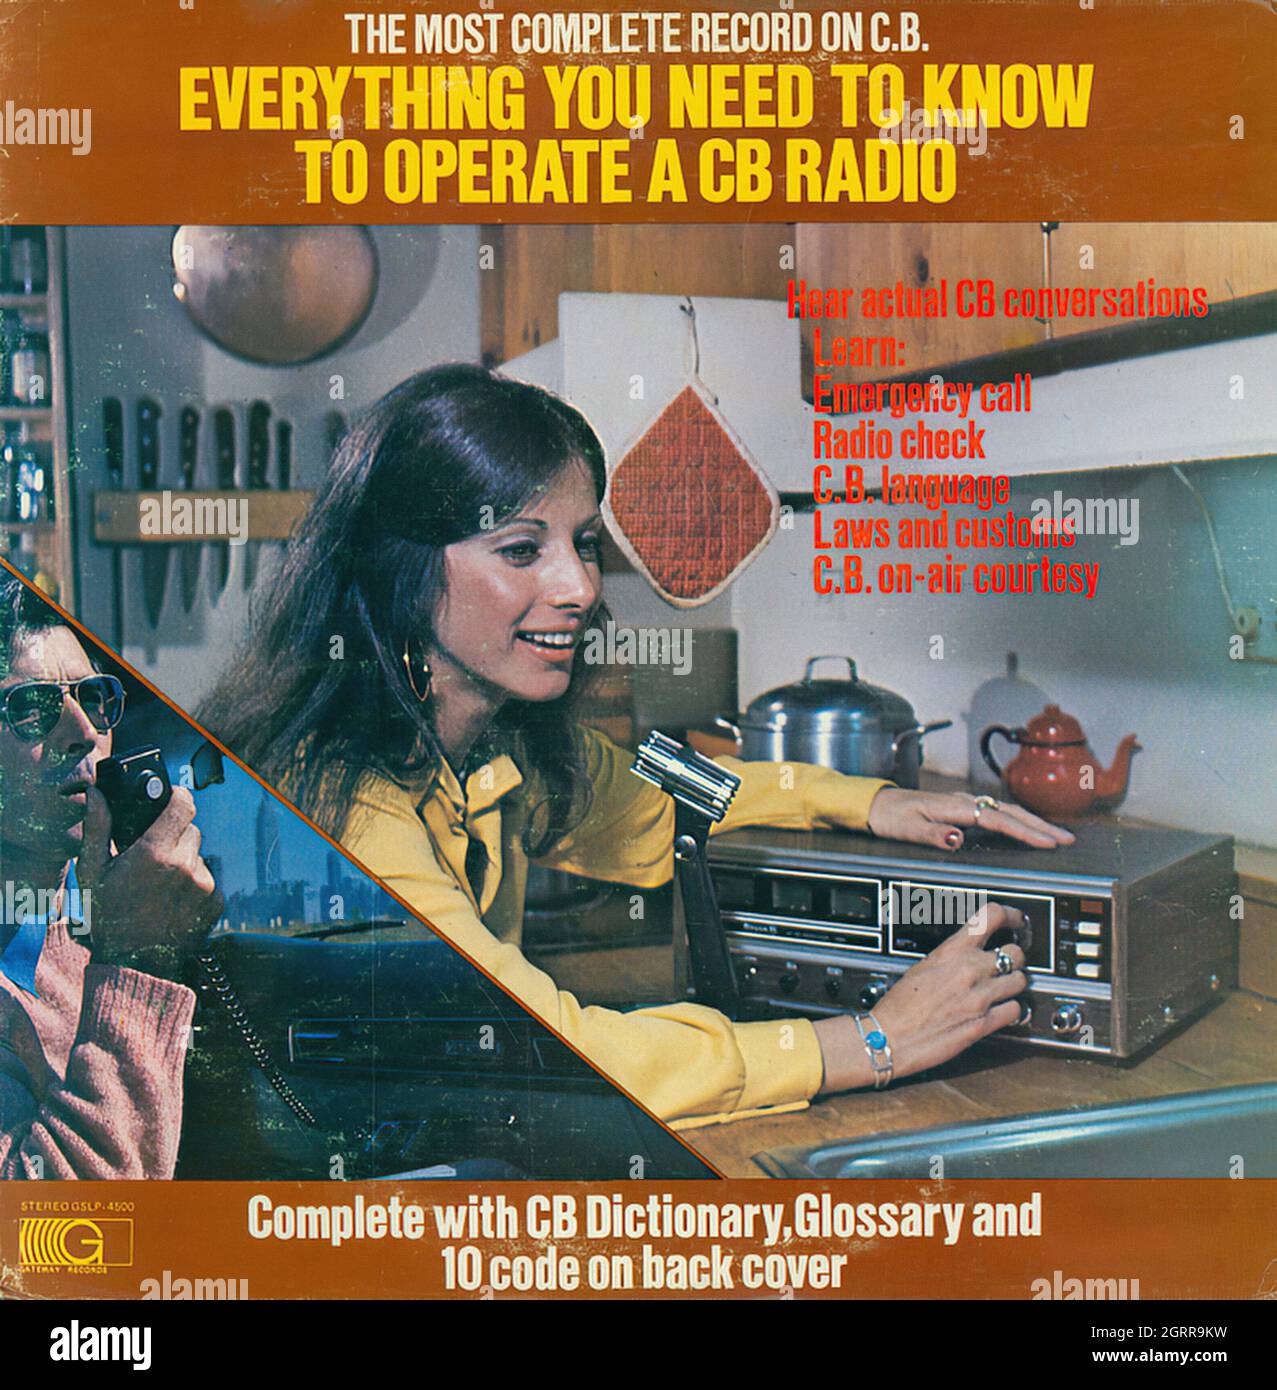 Everything You Need To Know To Operate A CB Radio - Vintage Vinyl Album  Stock Photo - Alamy